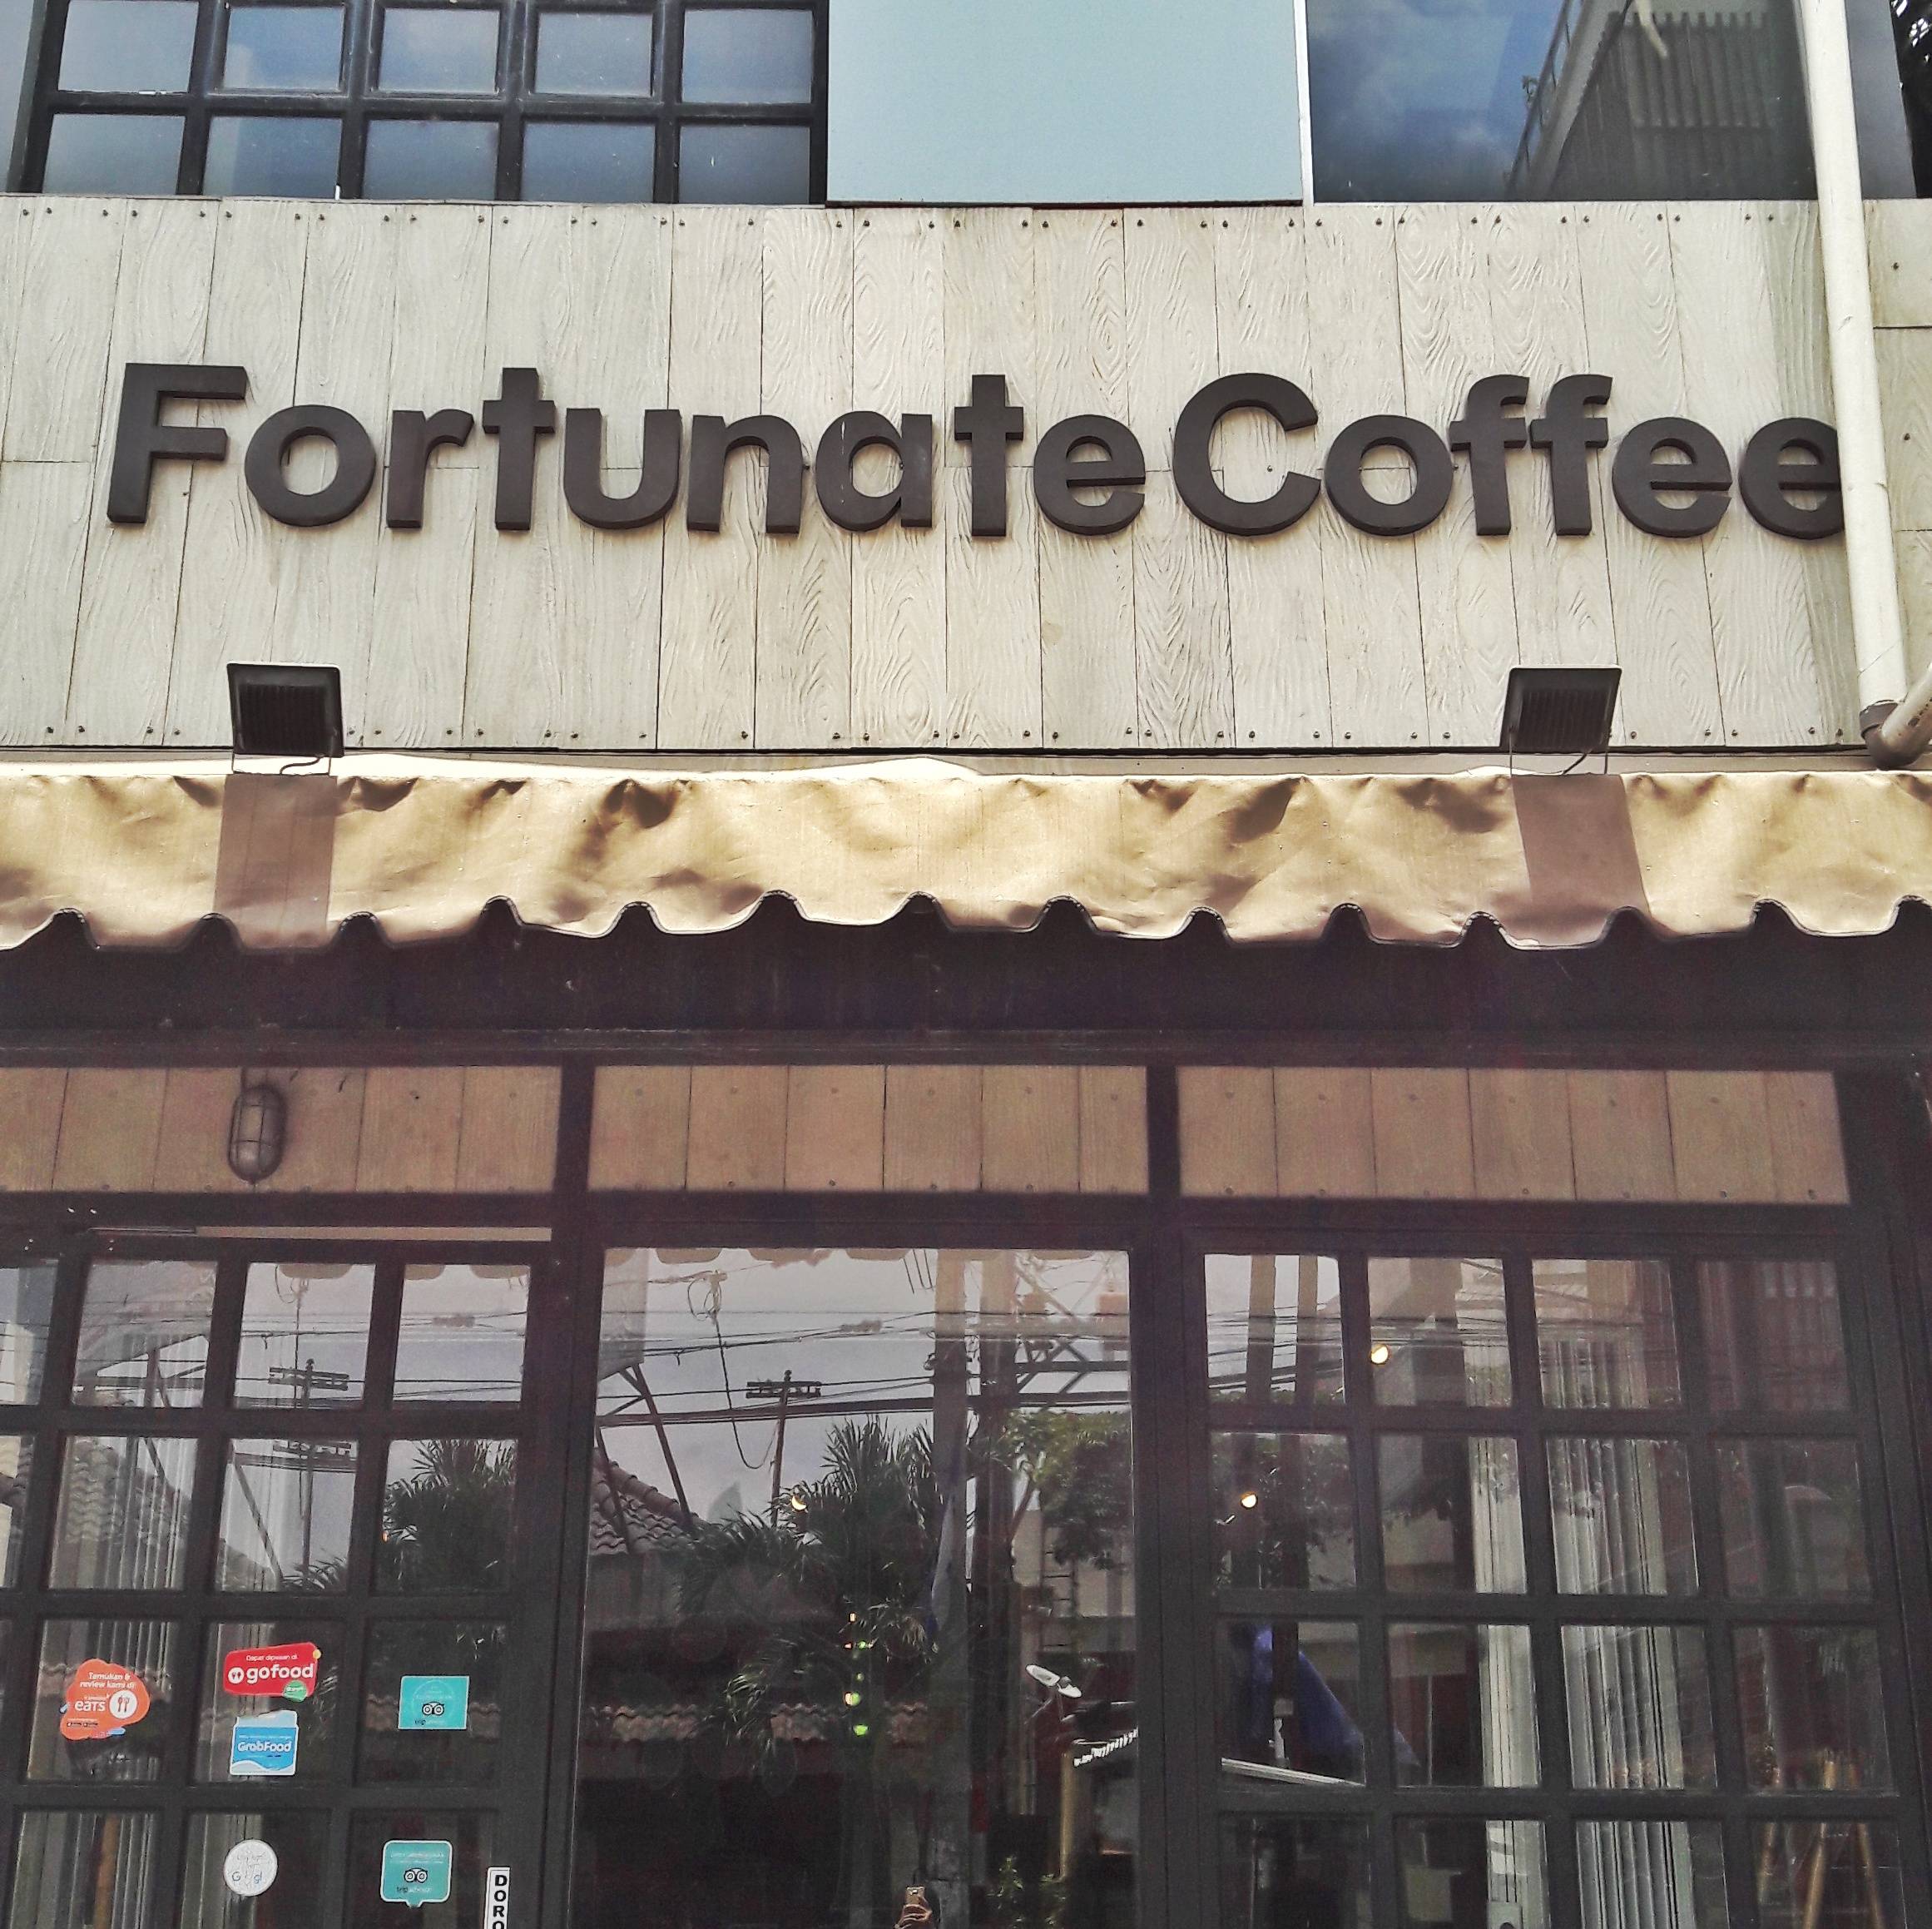 Fortunate Coffee